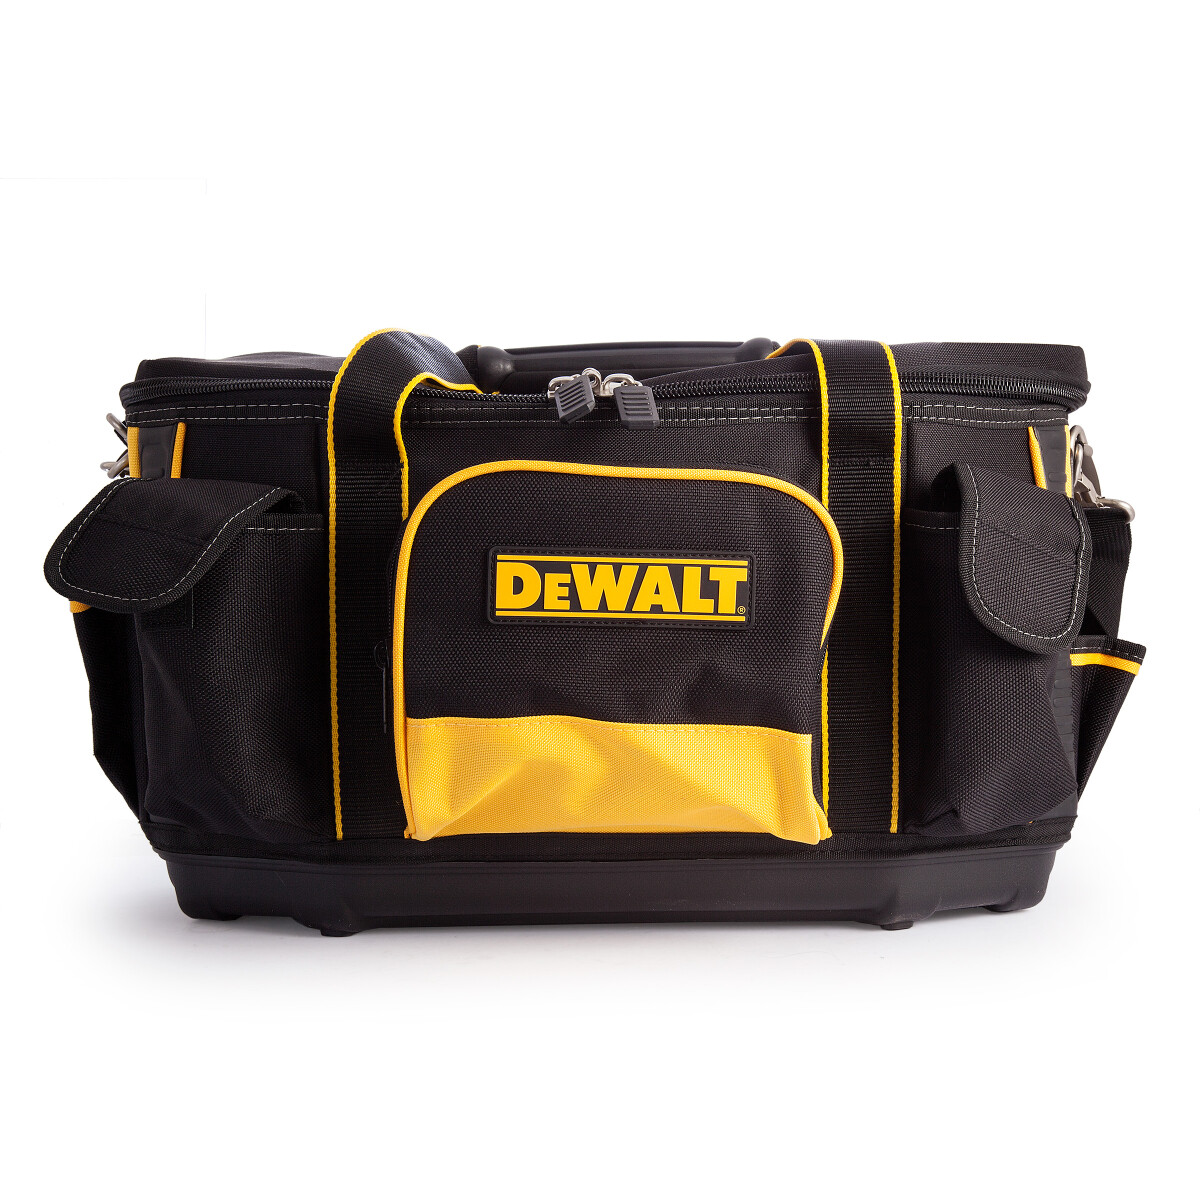 Dewalt Large Round Top Rigid Bag 20" Hand & Power Tool Toolbag 1-79-211 